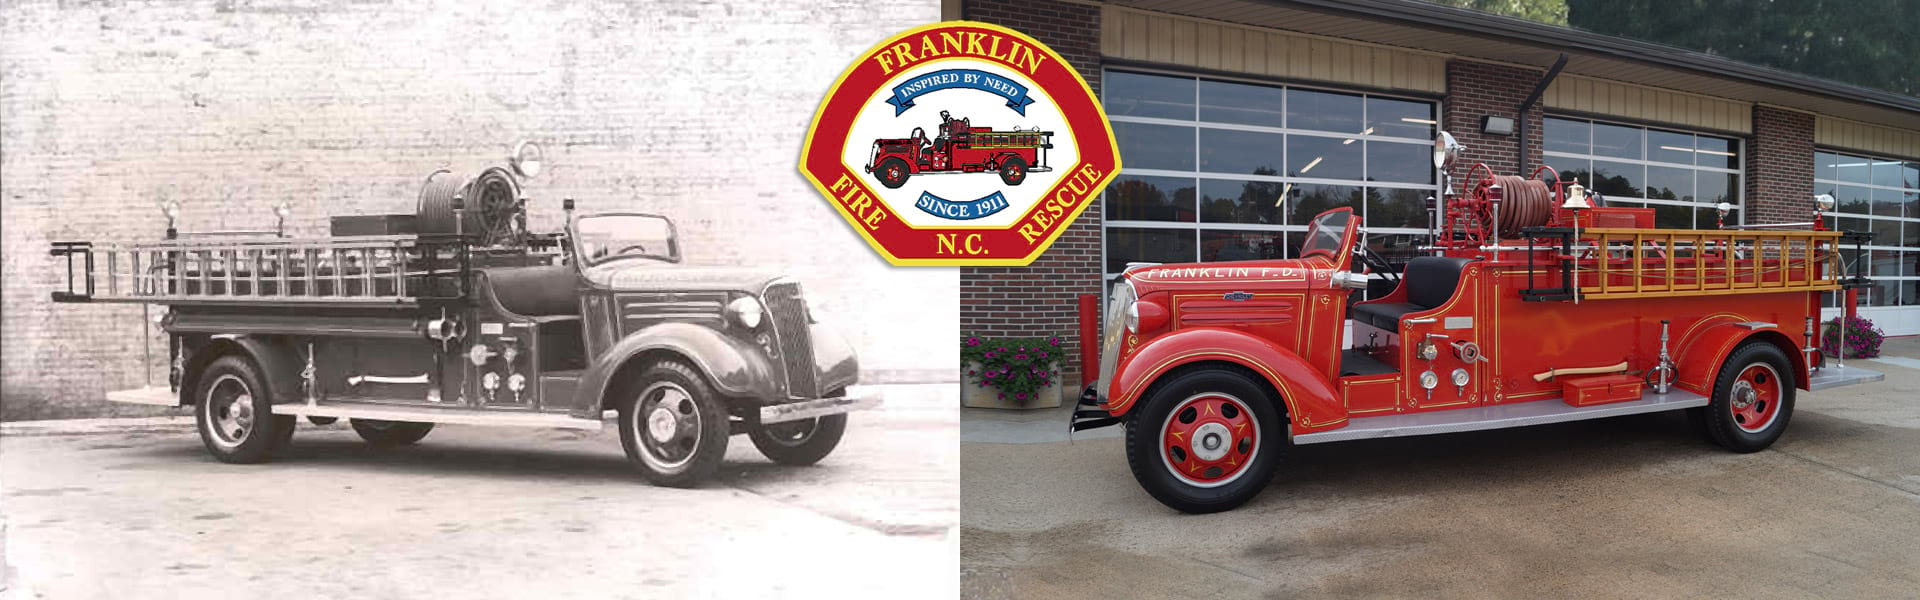 1937 Fire Truck Franklin Fire-Rescue Franklin NC